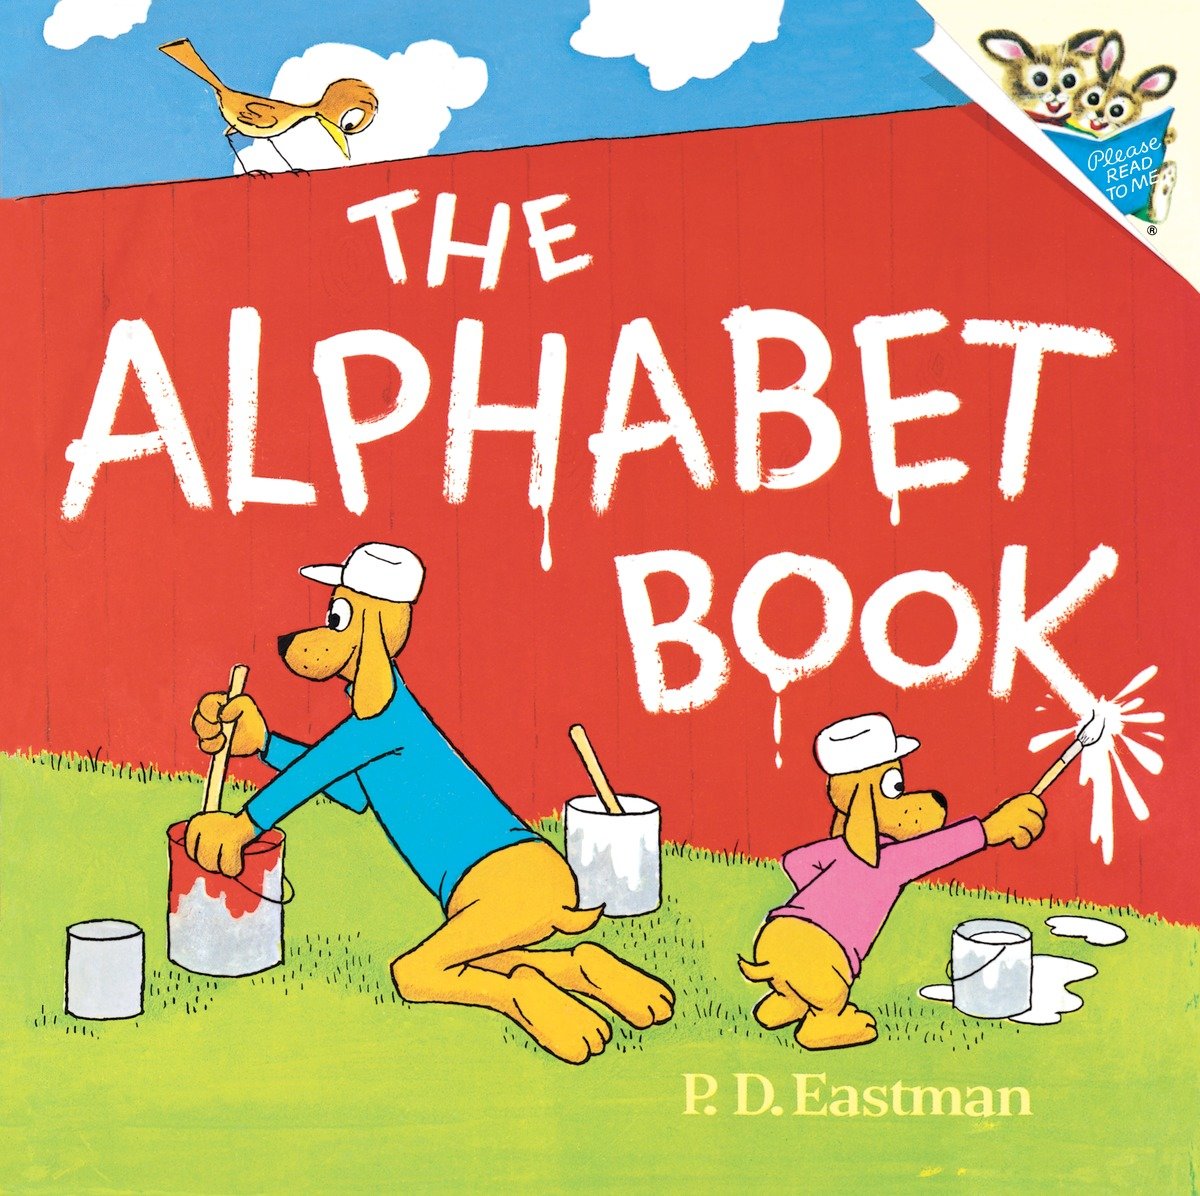 The alphabet book cover image